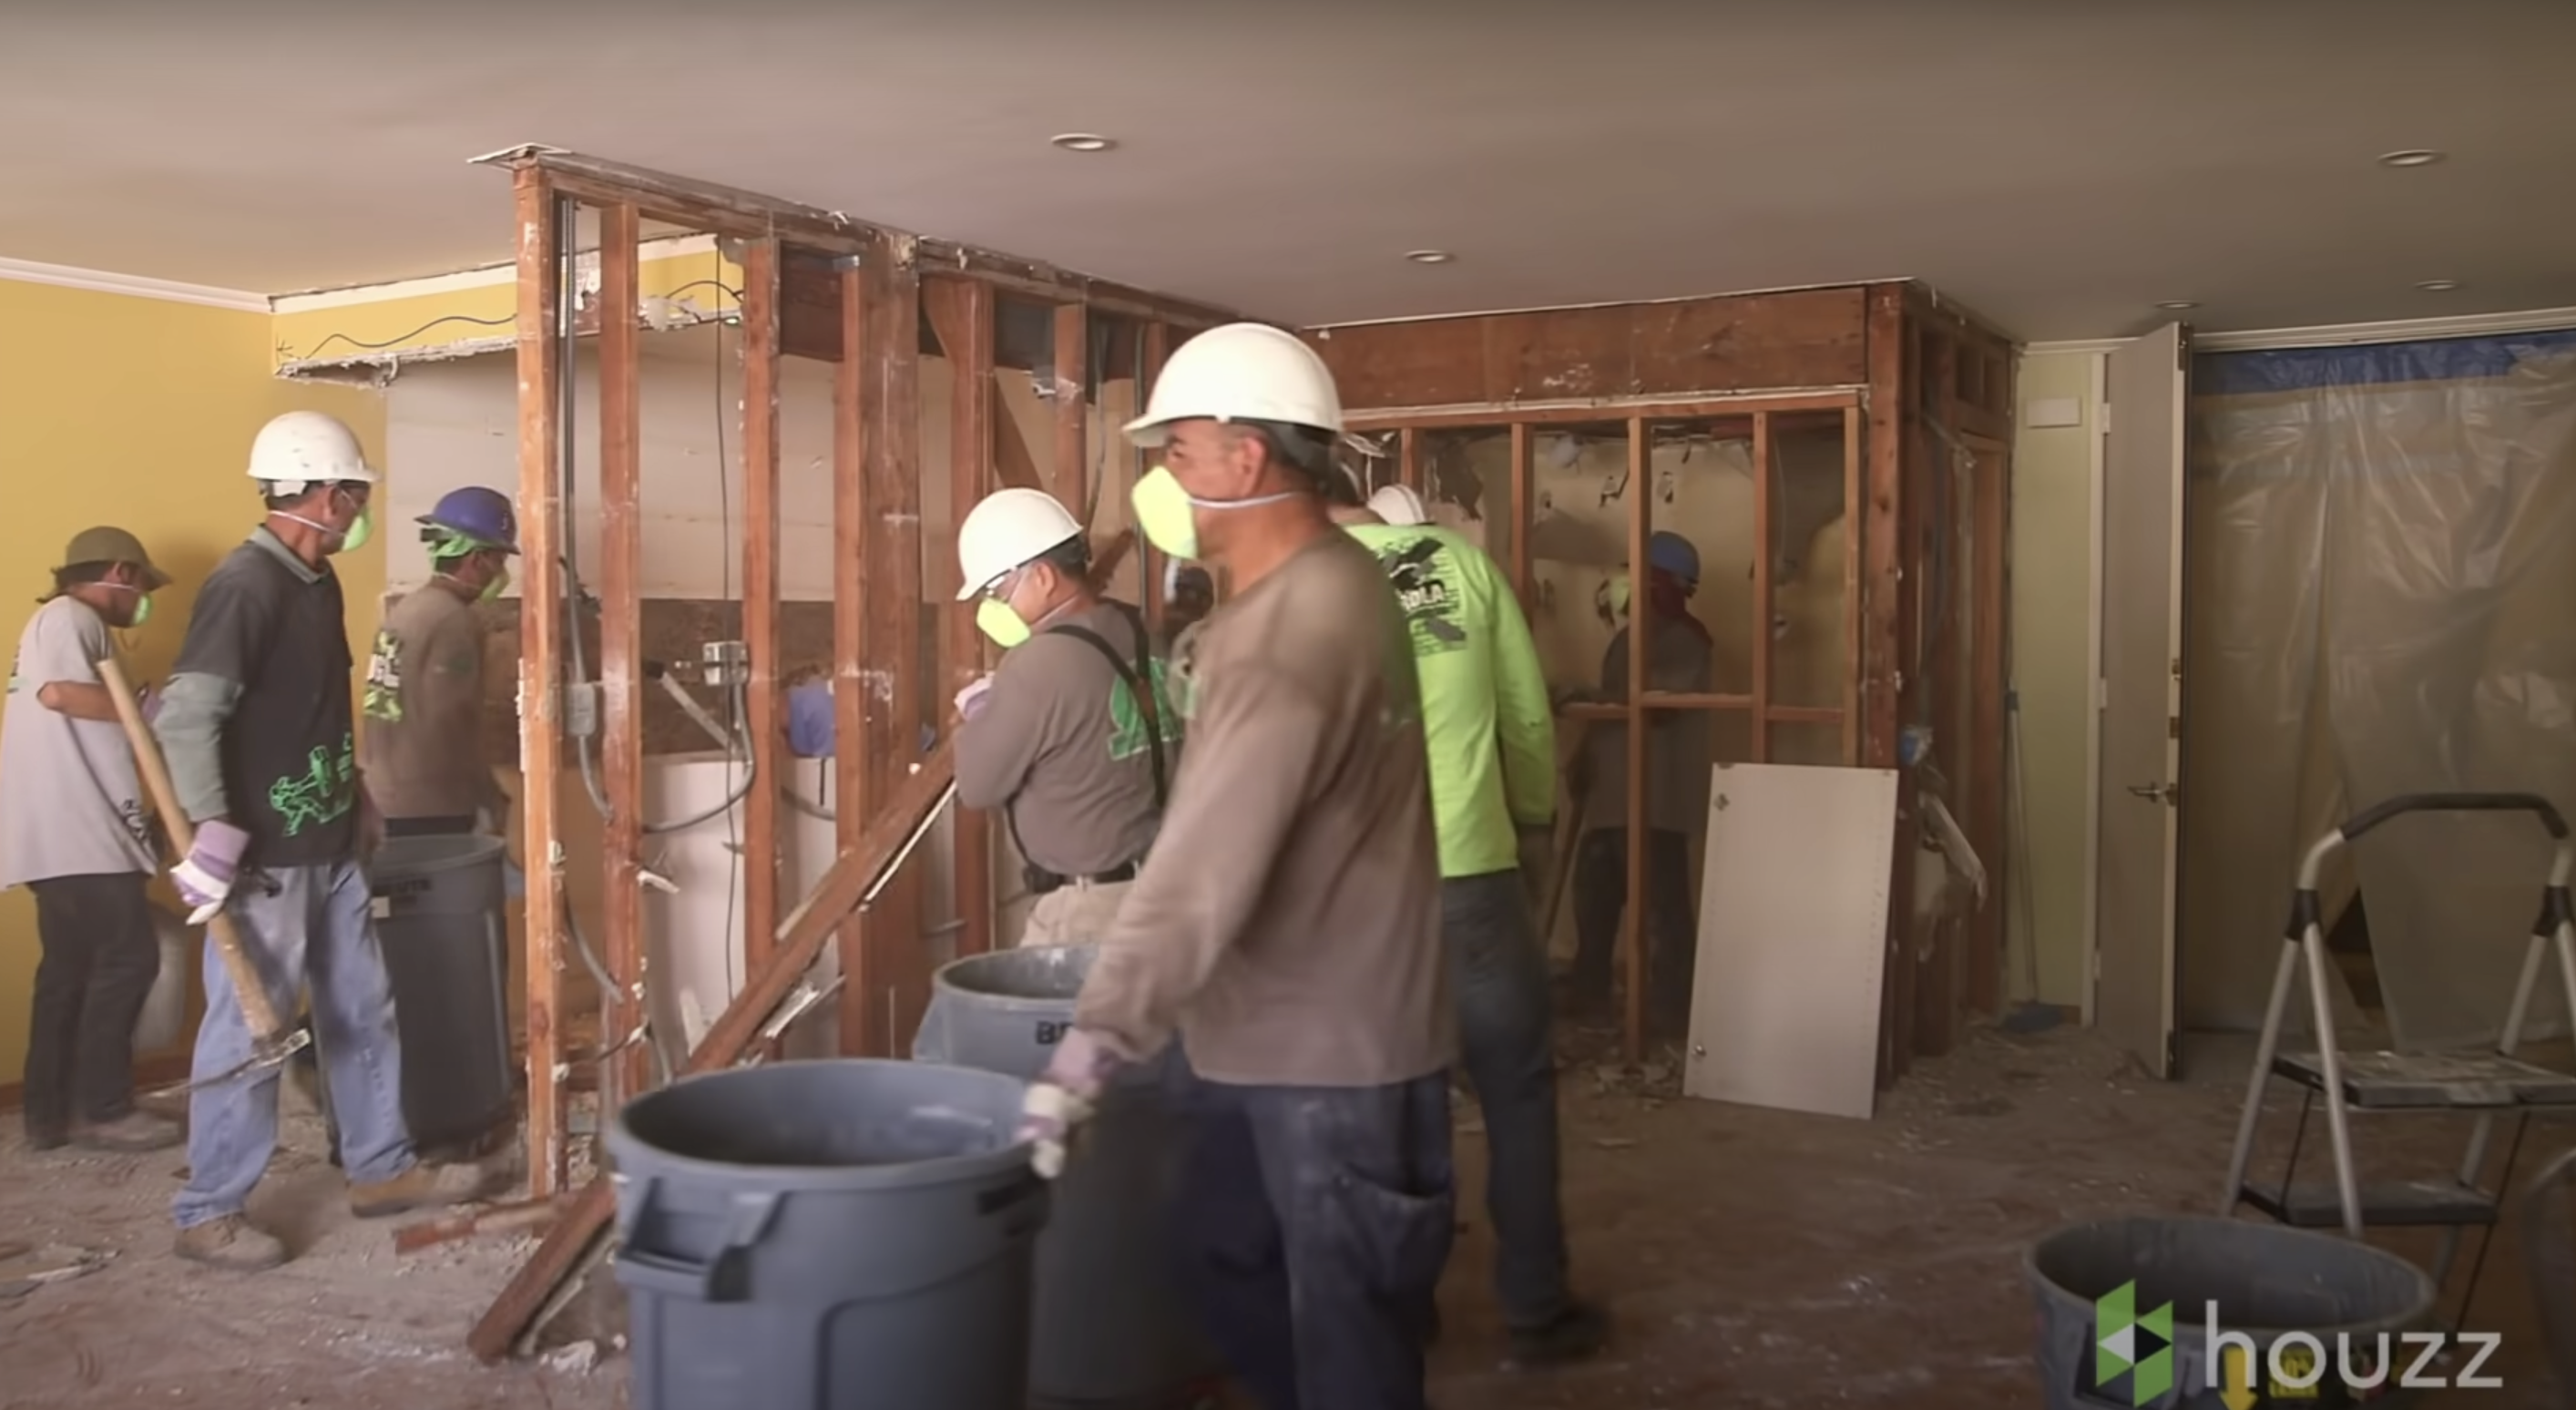 Men working on renovating Mila Kunis' parents' condo | Source: Youtube.com/HouzzTV